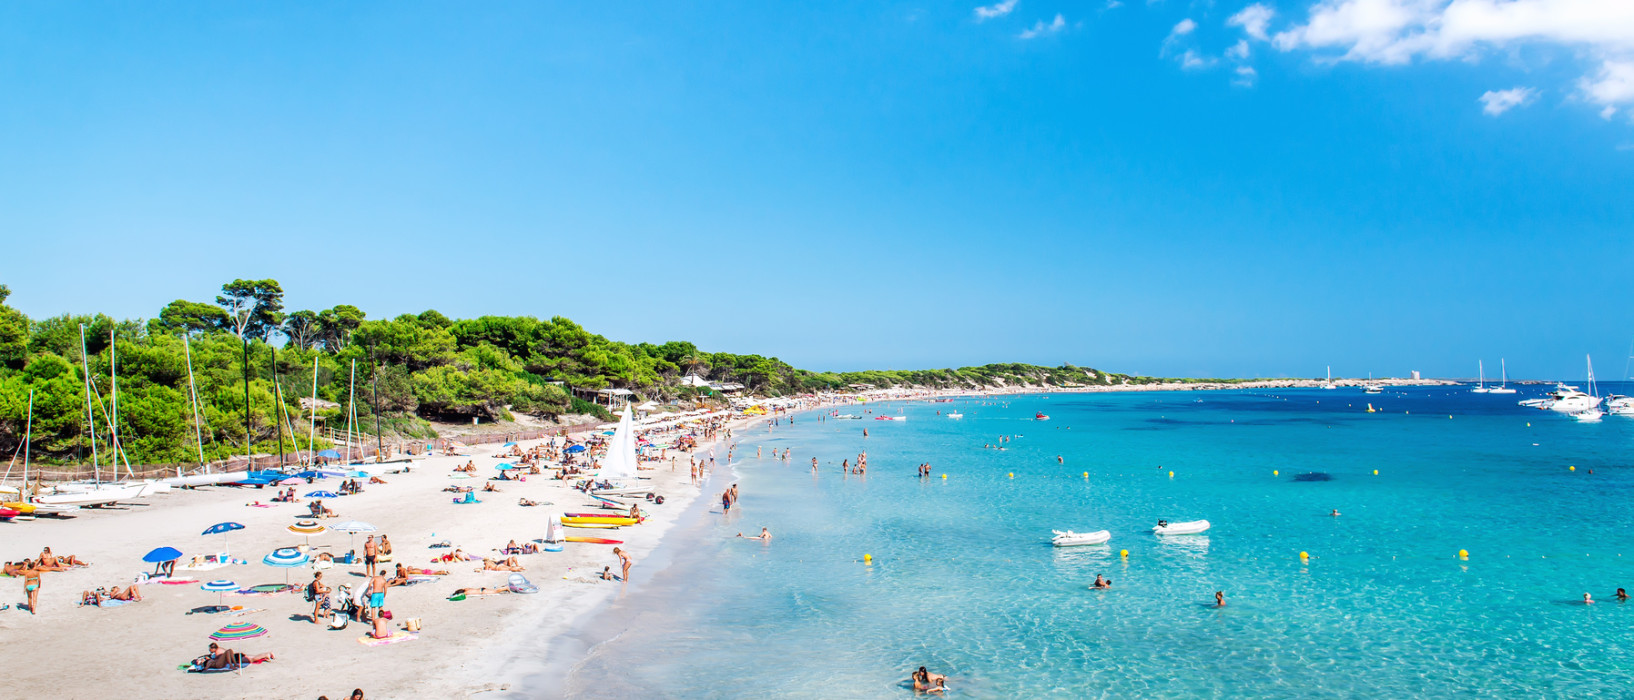 Où Sortir Le Soir à Ibiza Guide De Voyage De Ibiza Espagne